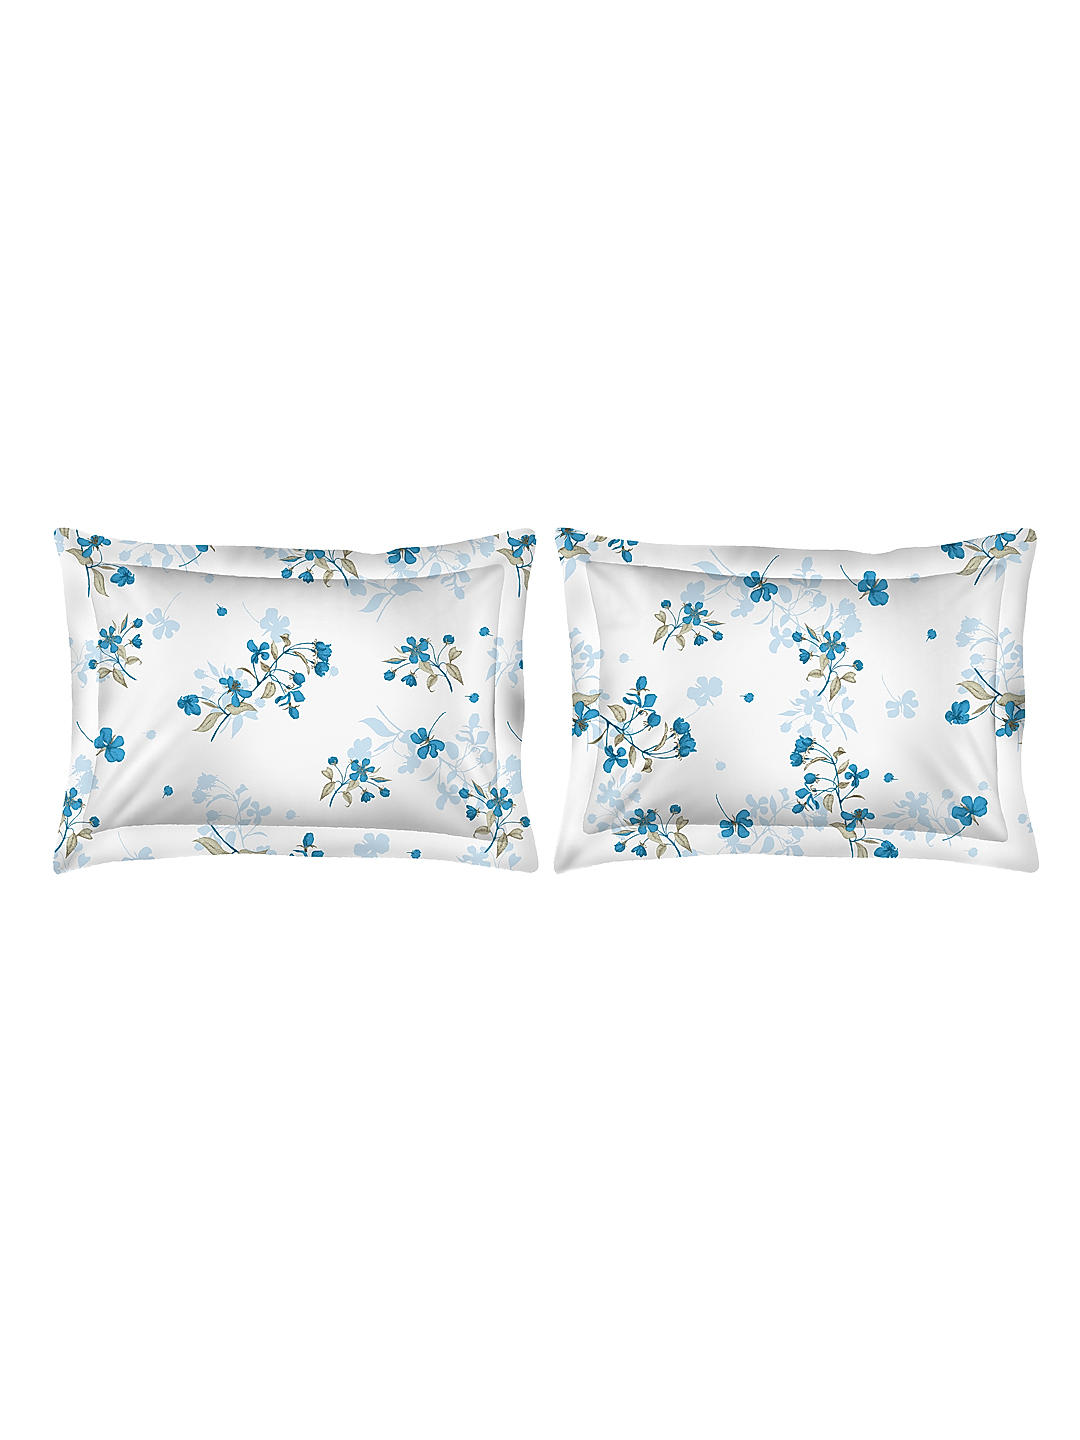 Iris Gaze-1 100% cotton Fine White/Blue Colored Floral Print King Bed Sheet Set